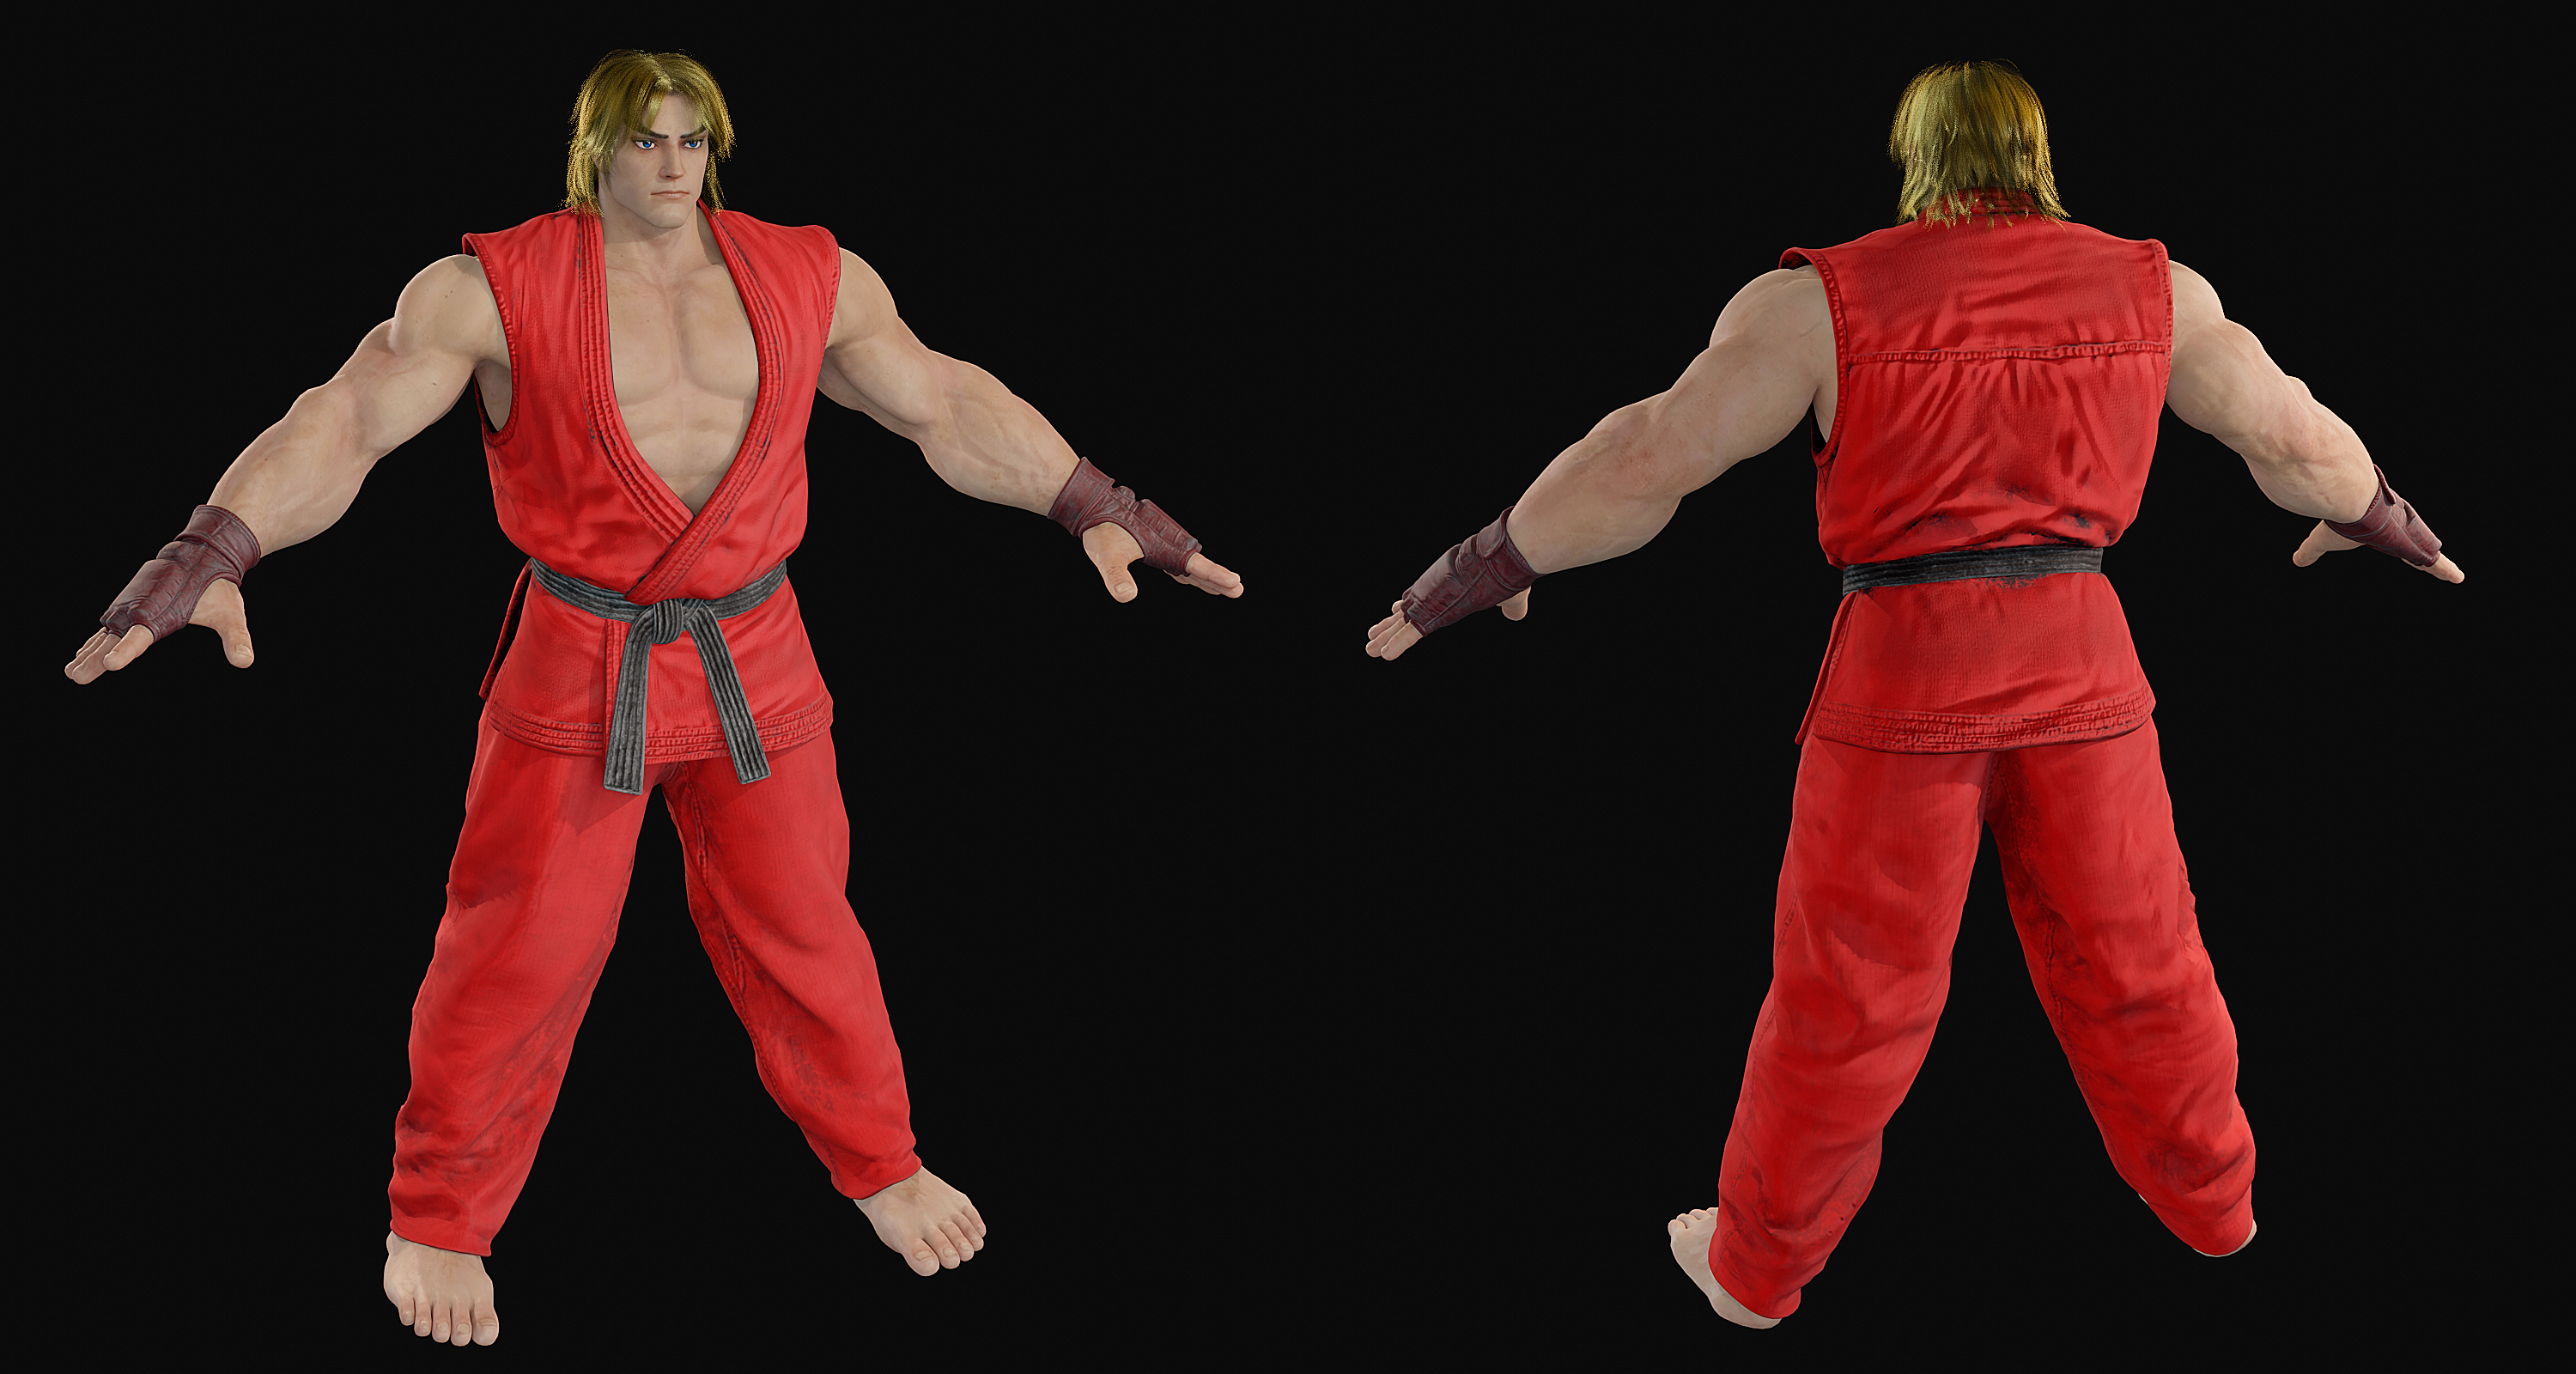 Street Fighter V - Blanka pose animations by Quake332 on DeviantArt